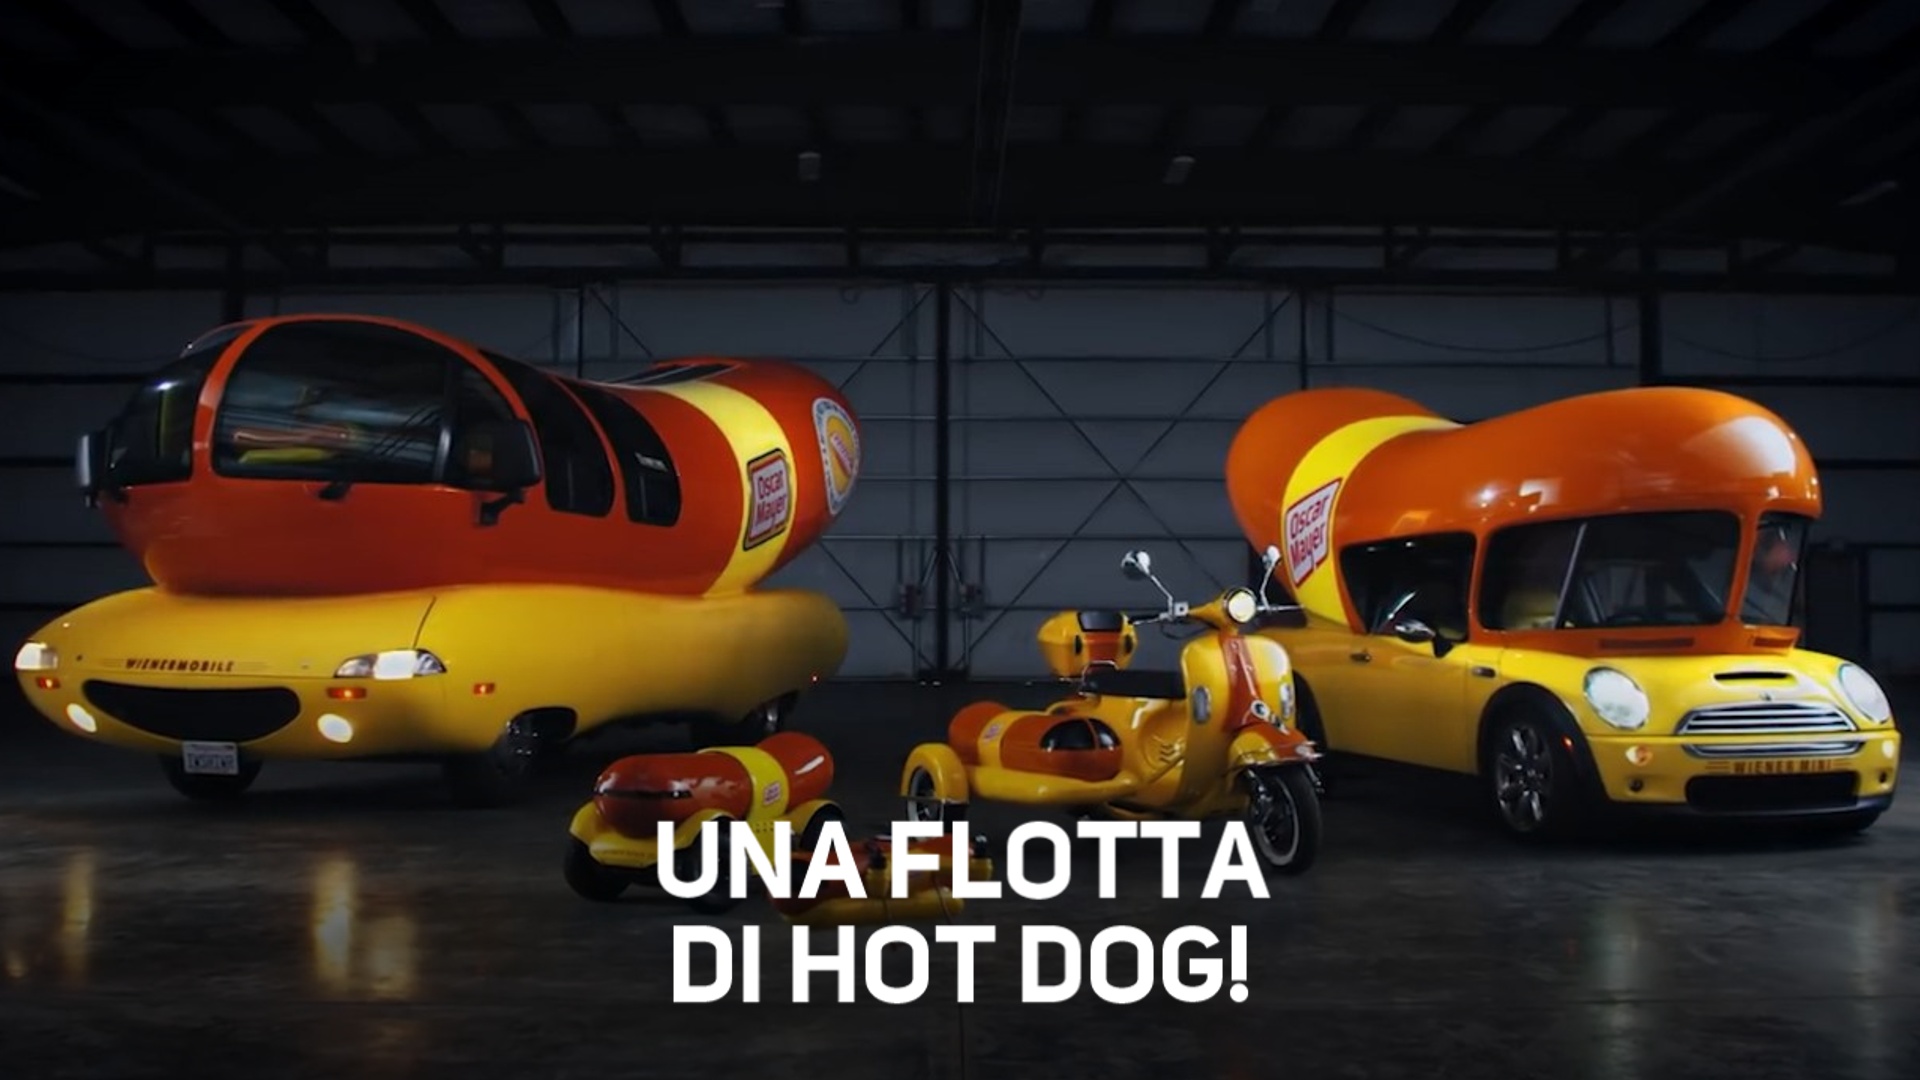 Una flotta di hot dog pronta per le consegne!